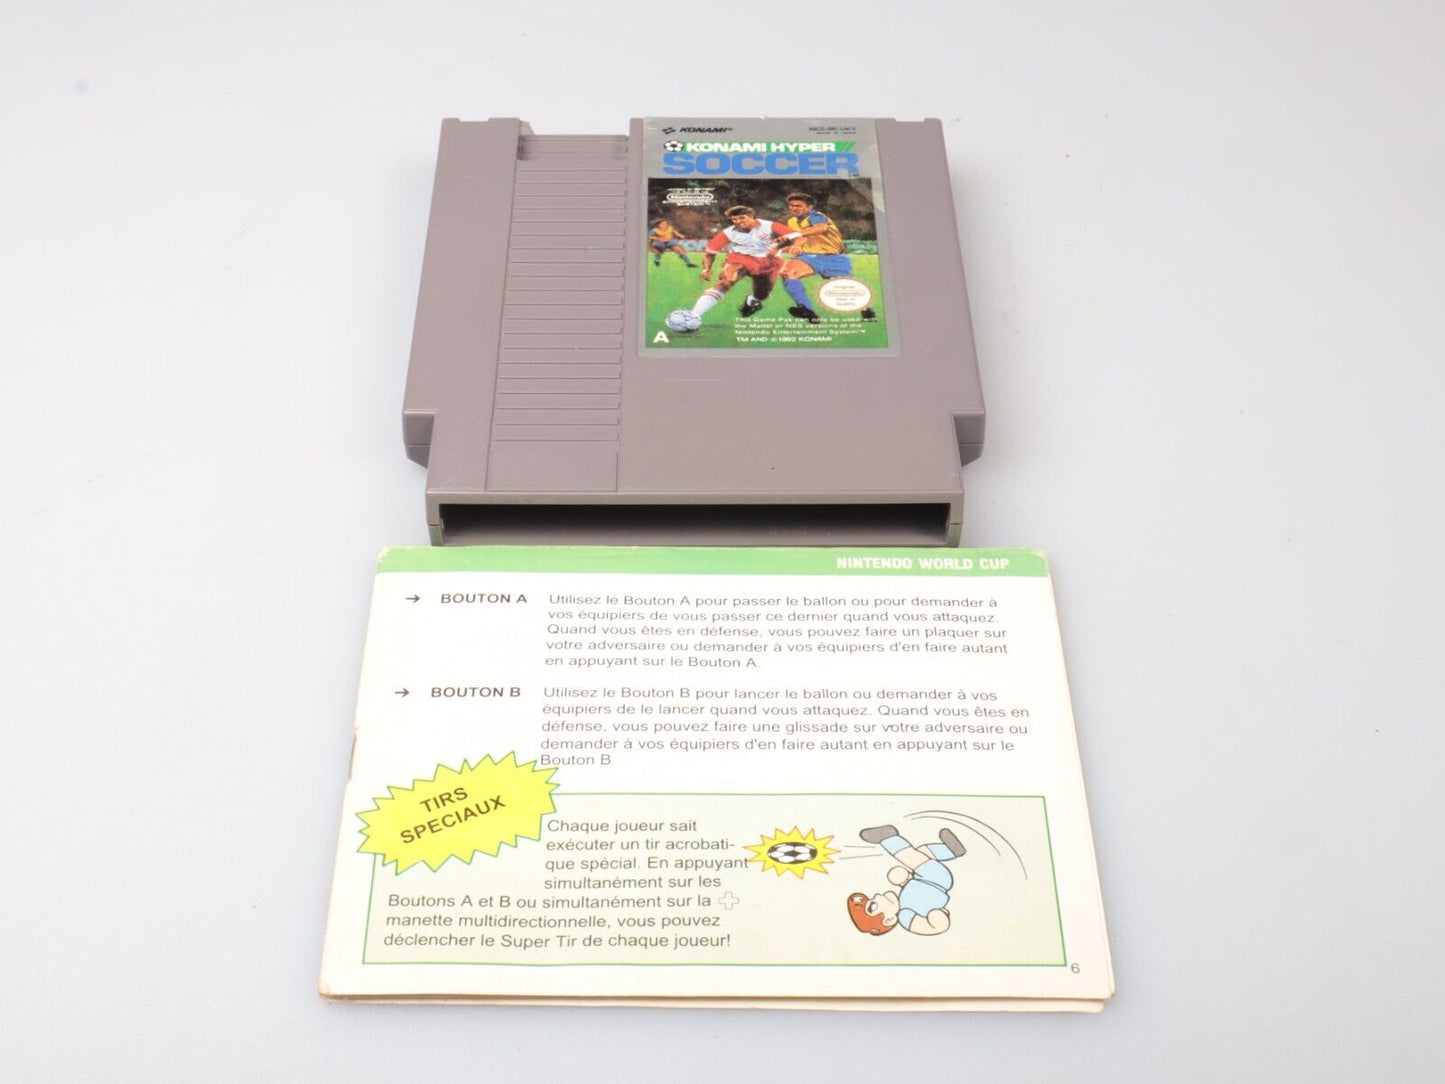 NES | Konami Hyper Soccer | EAI | Nintendo NES Cartridge